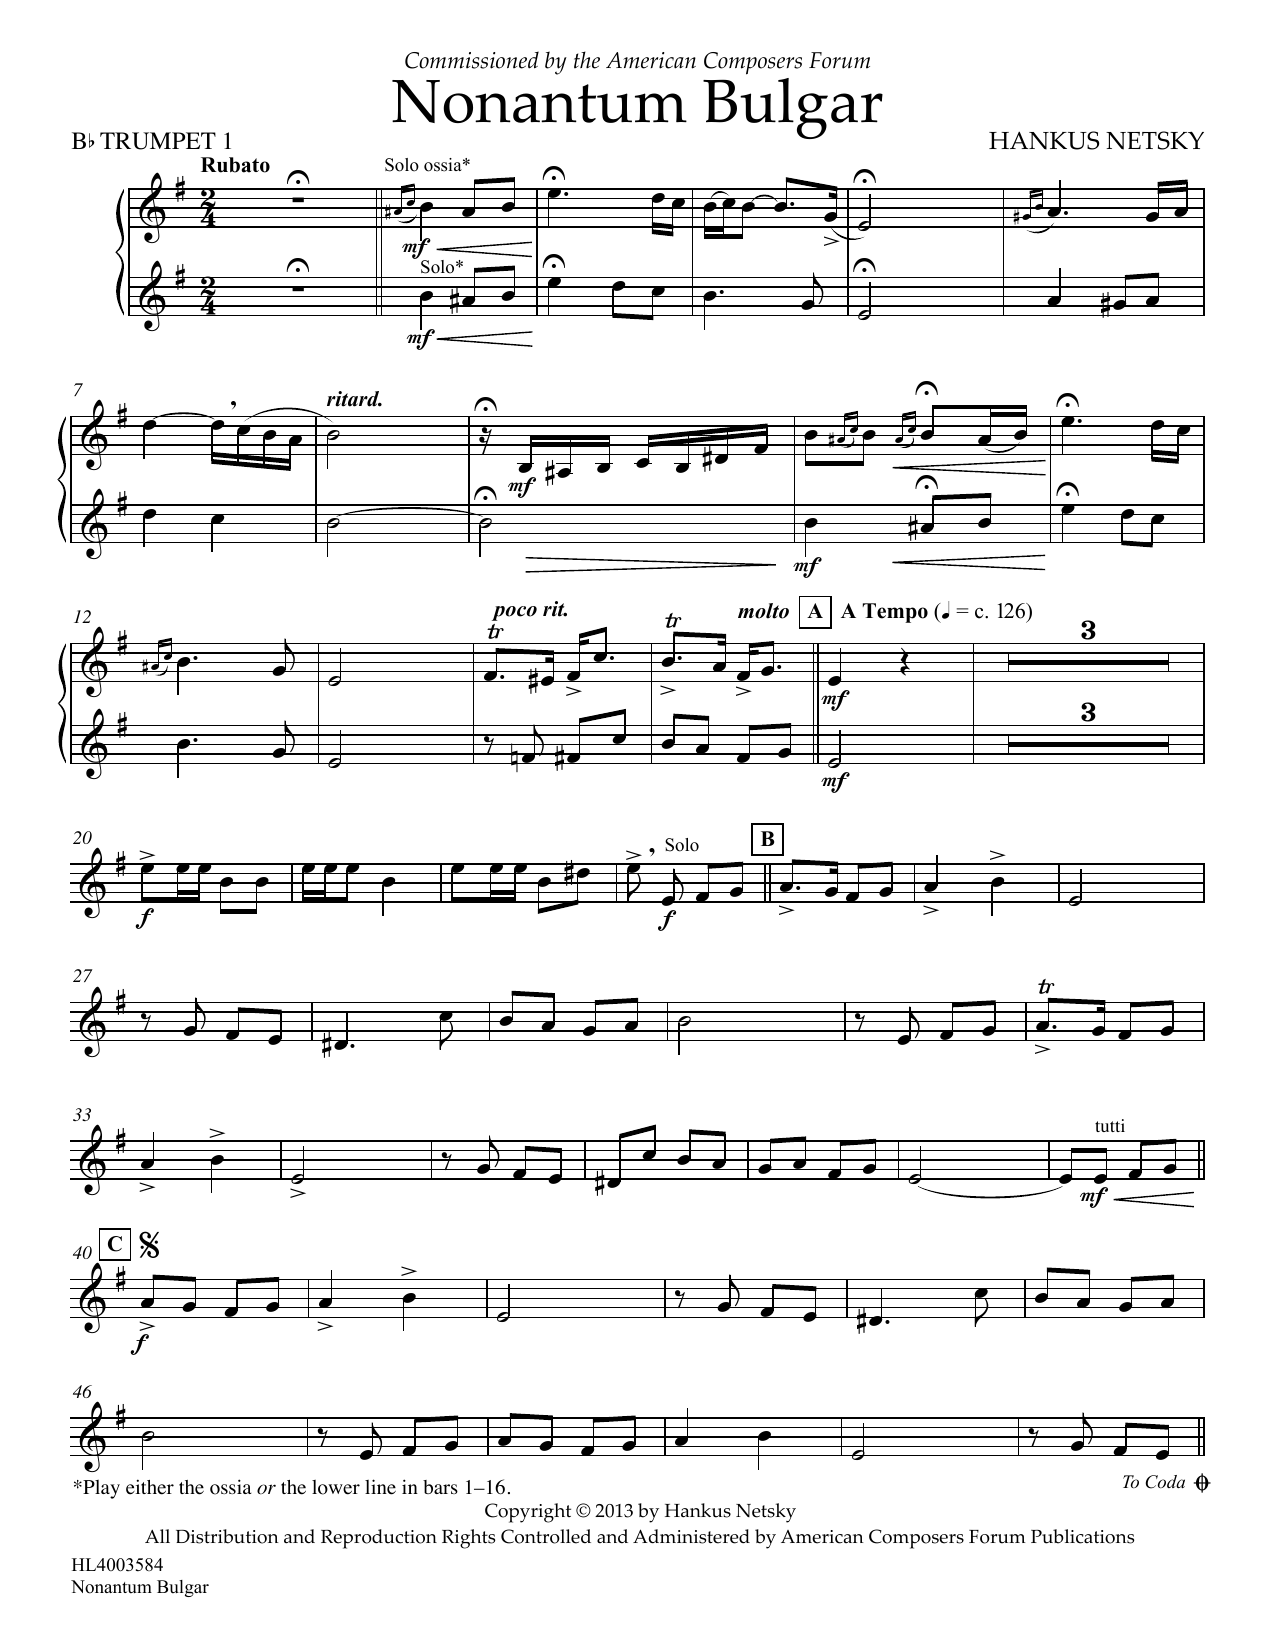 Hankus Netsky Nonantum Bulgar - Bb Trumpet 1 Sheet Music Notes & Chords for Concert Band - Download or Print PDF